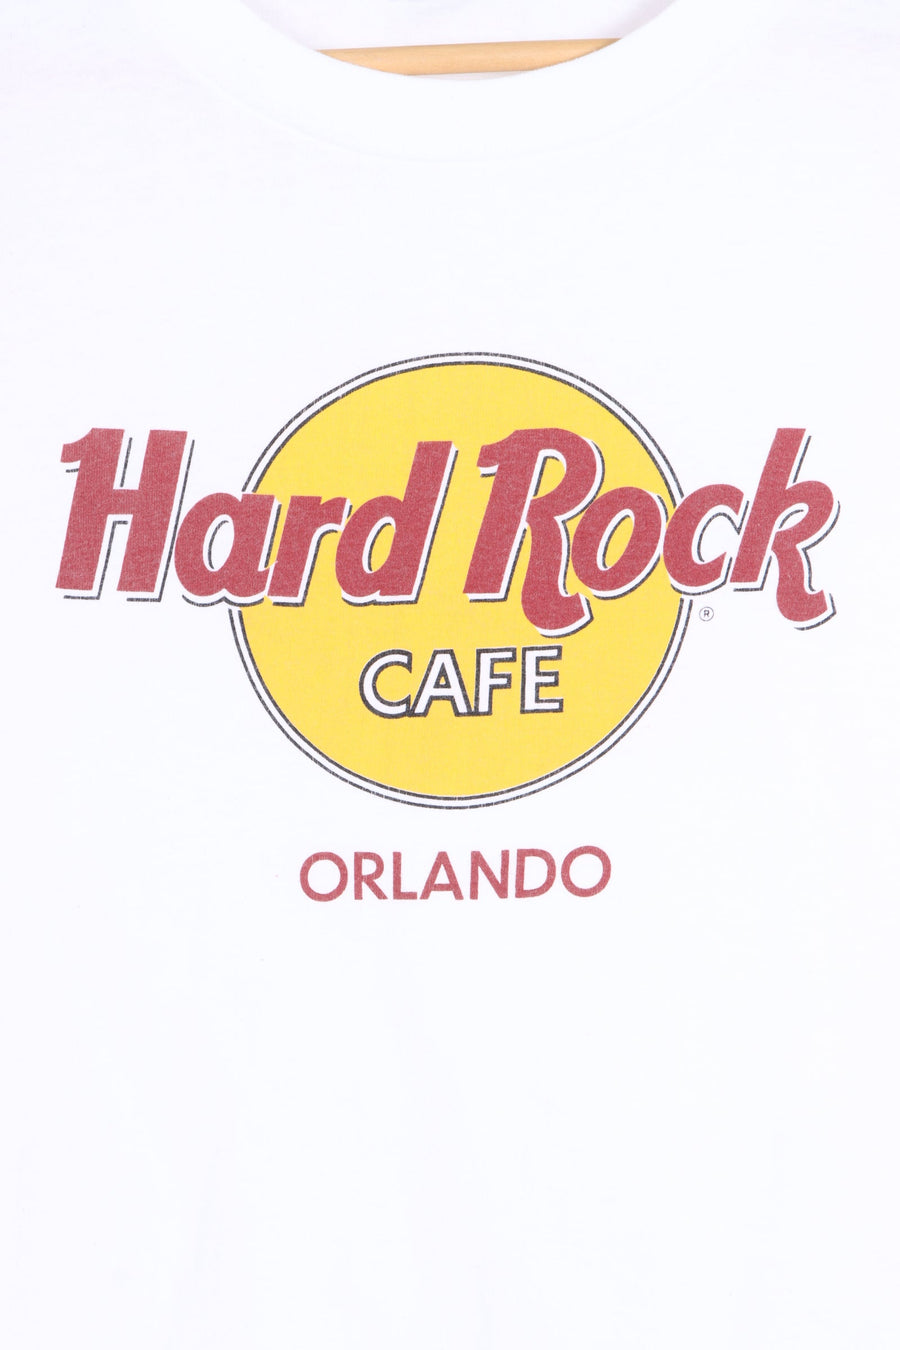 HARD ROCK CAFE Orlando Single Stitch Tee USA Made (L-XL)